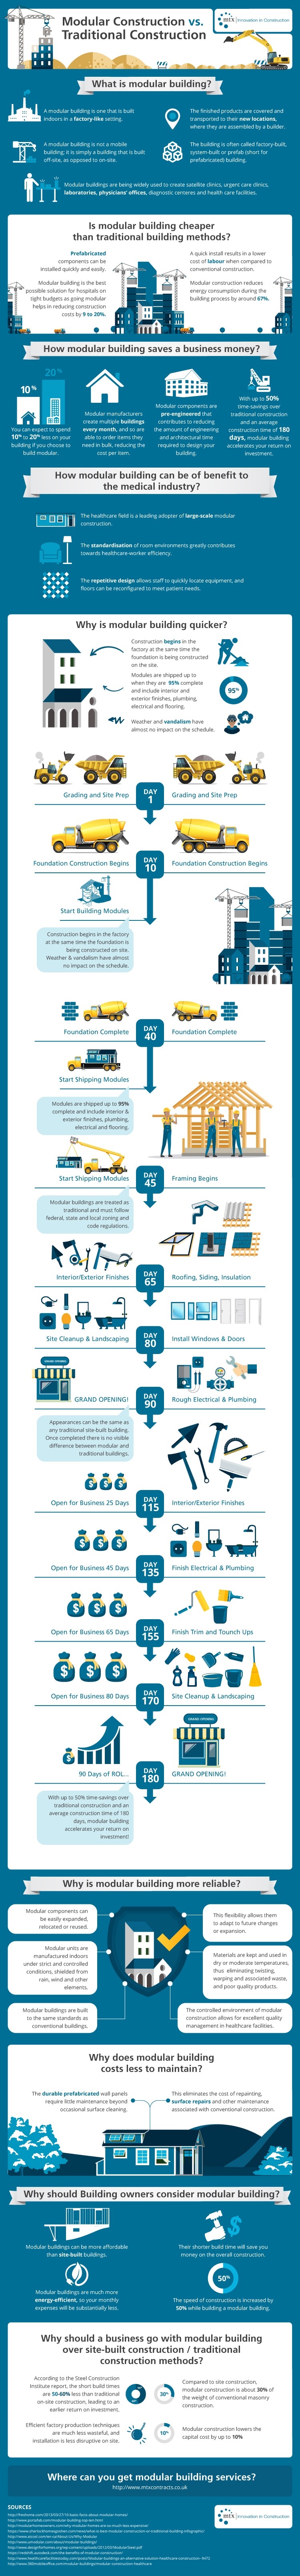 modular vs traditional construction infographic